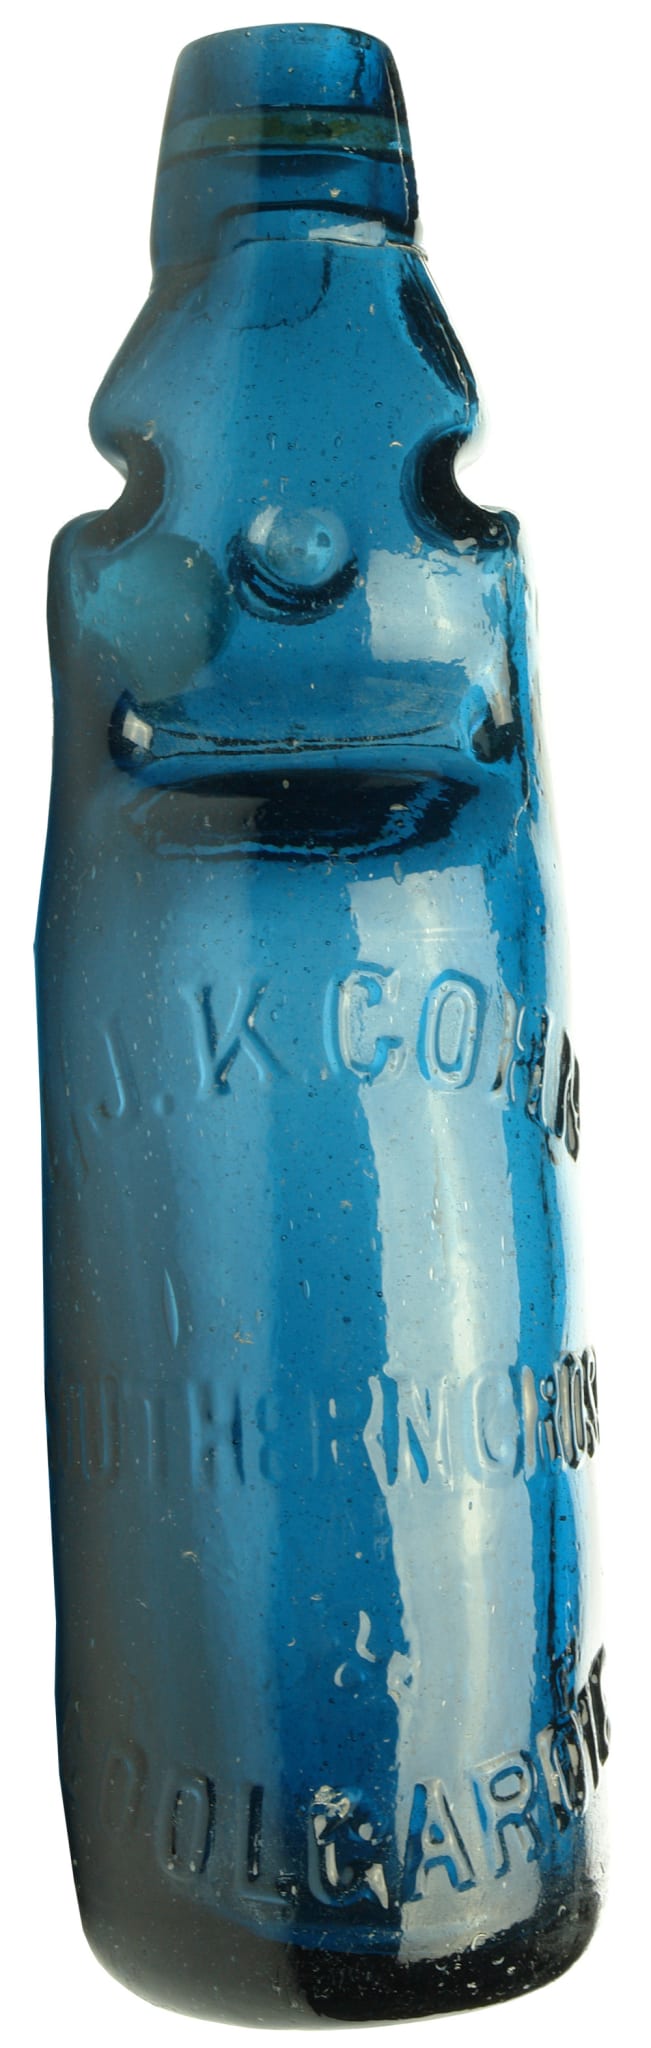 Cohn Southern Cross Coolgardie Blue Acme Patent Bottle